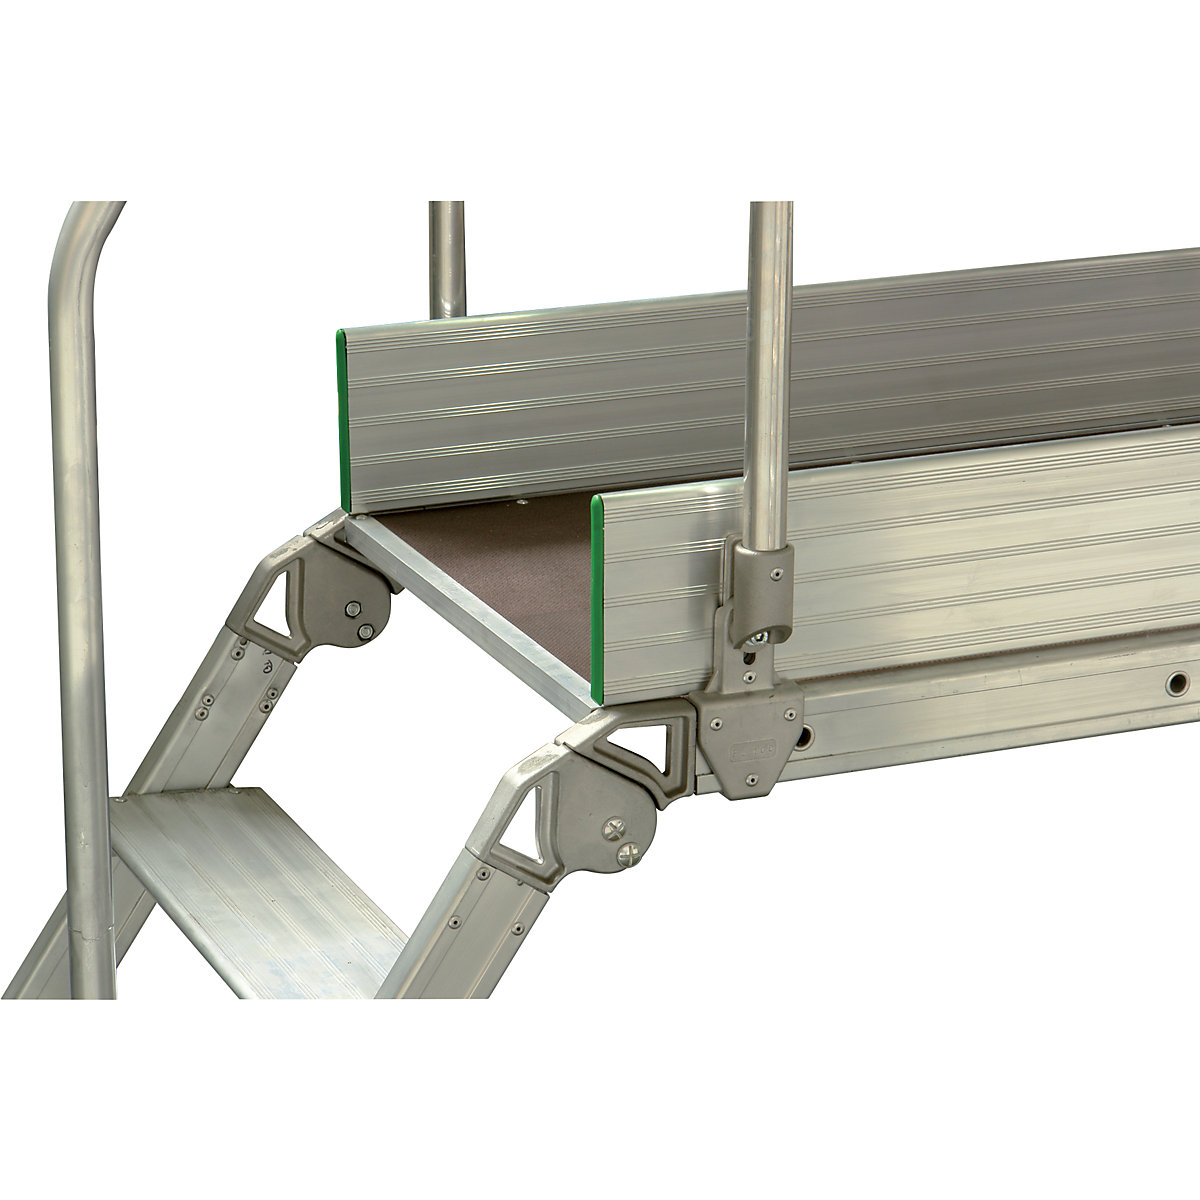 Aluminium ladderbrug (Productafbeelding 2)-1